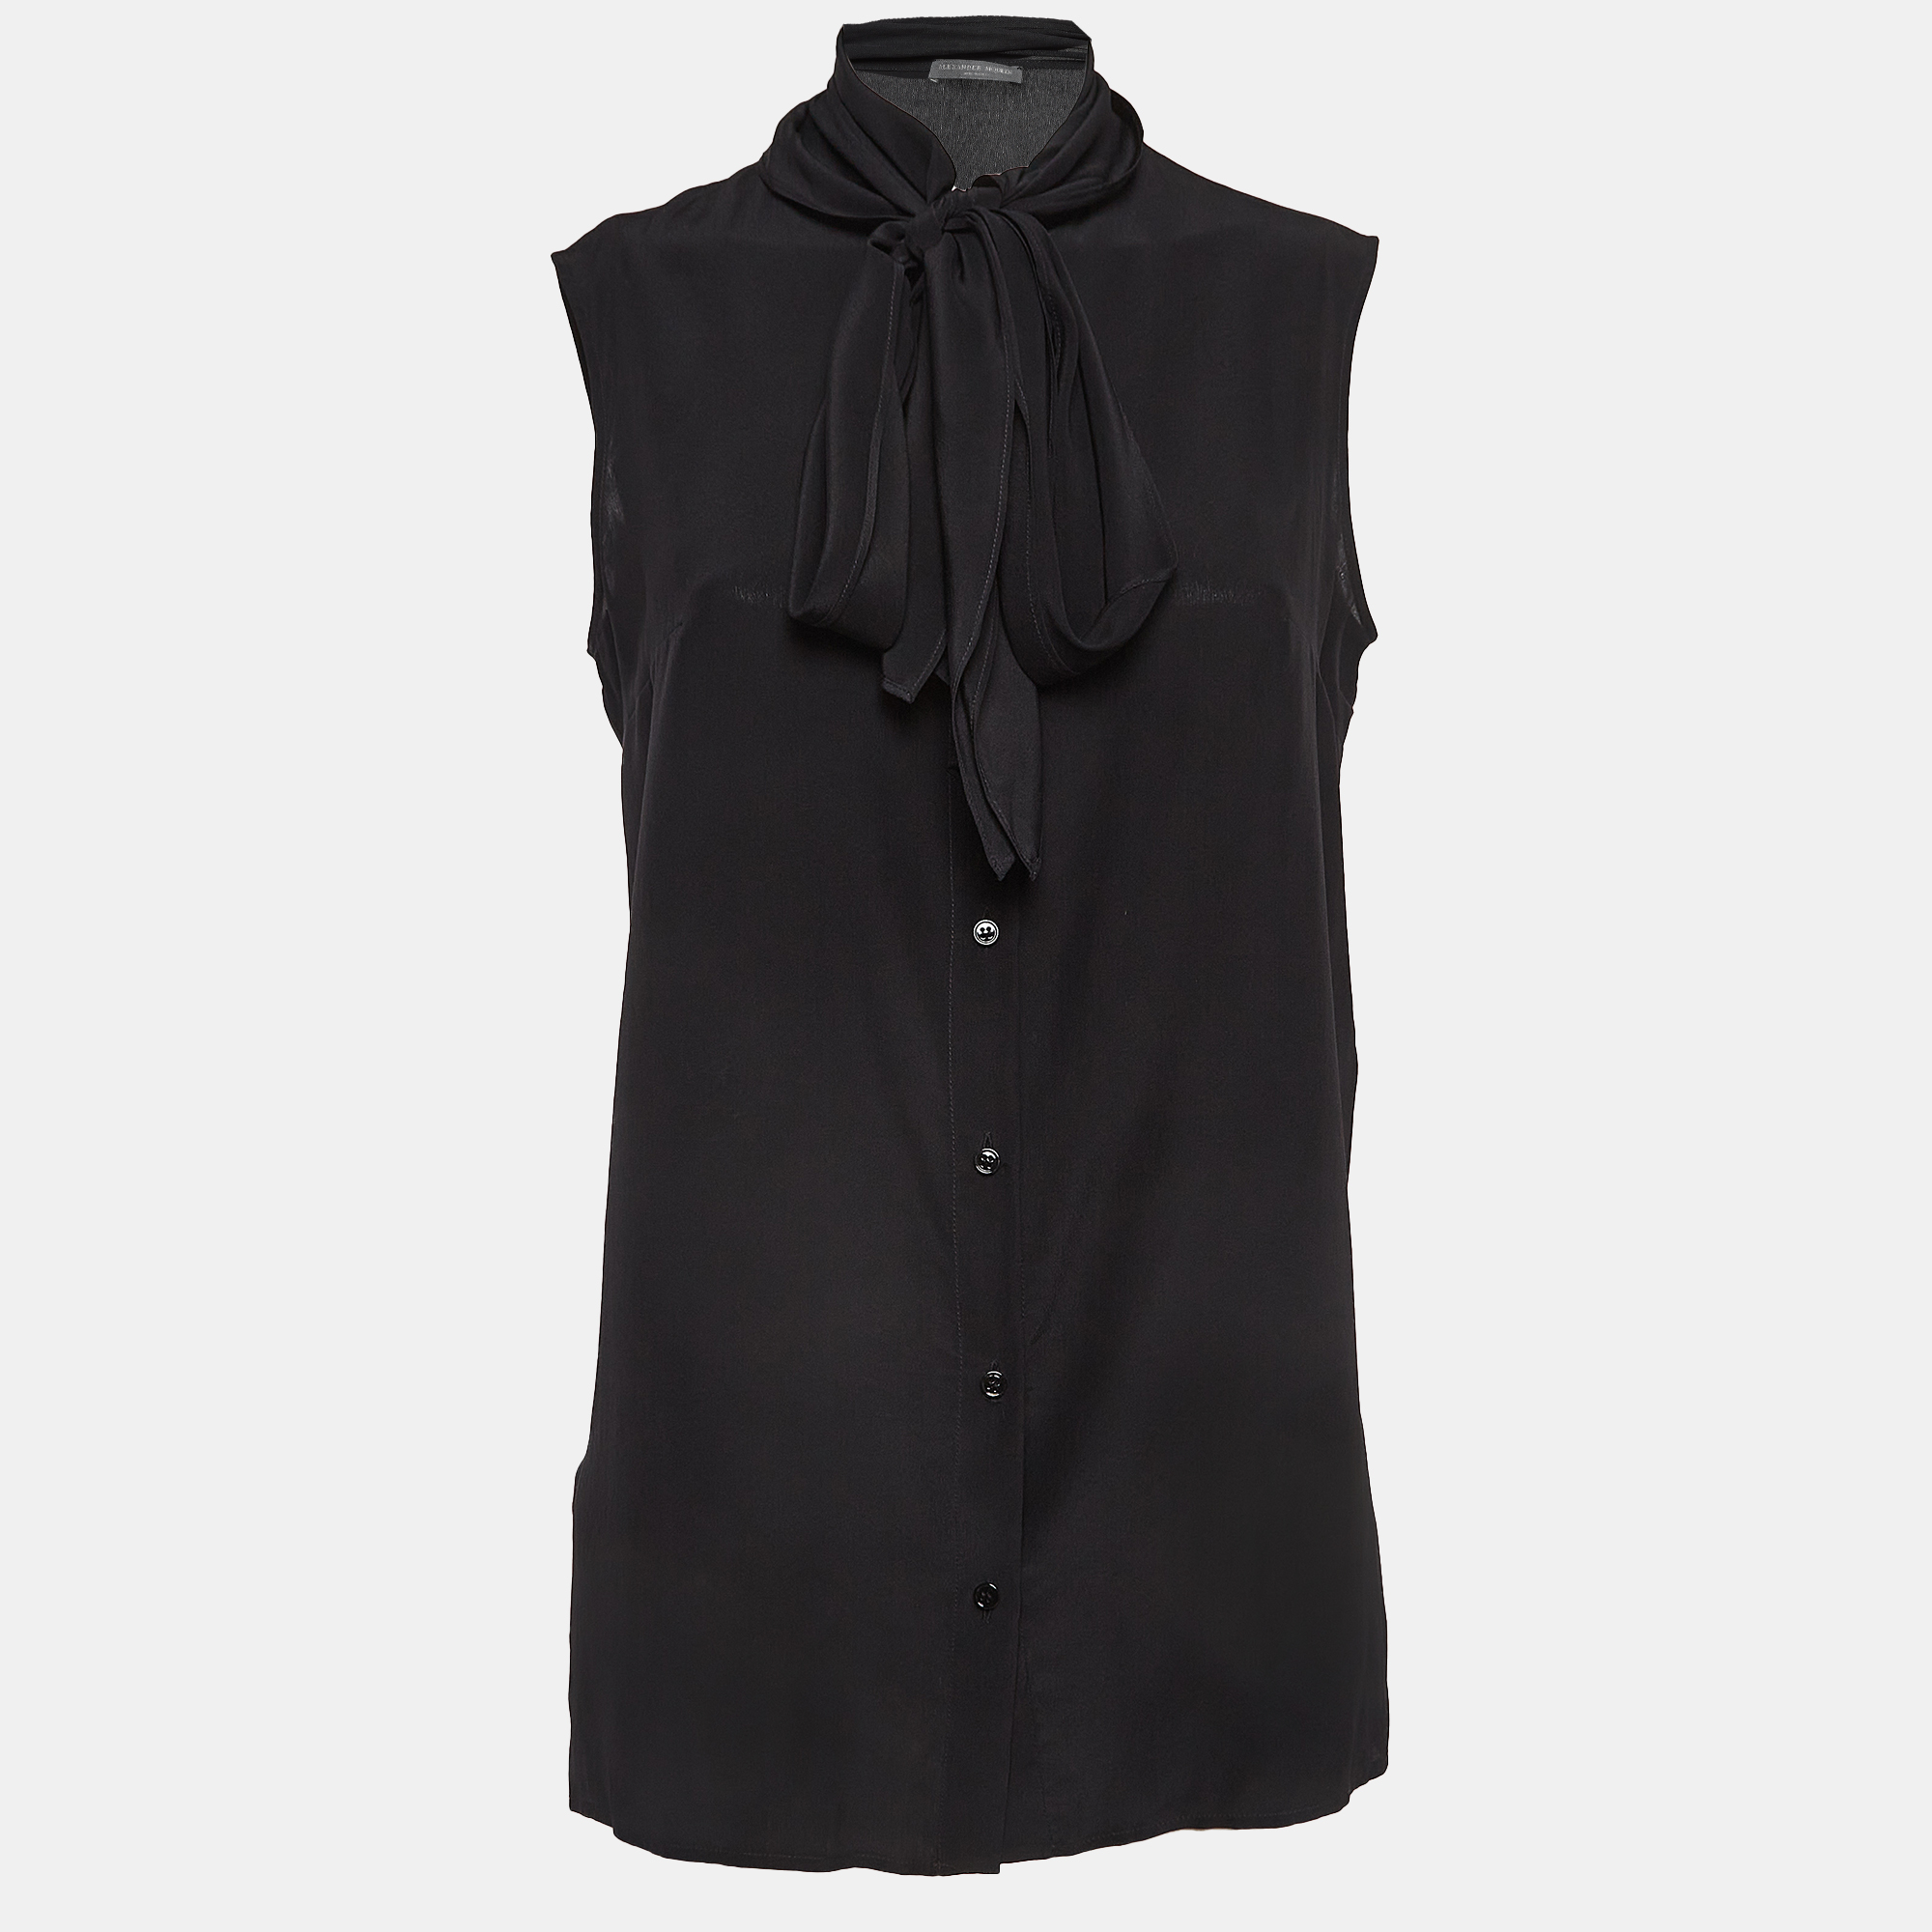 Alexander mcqueen black silk buttoned neck tie sleeveless blouse m